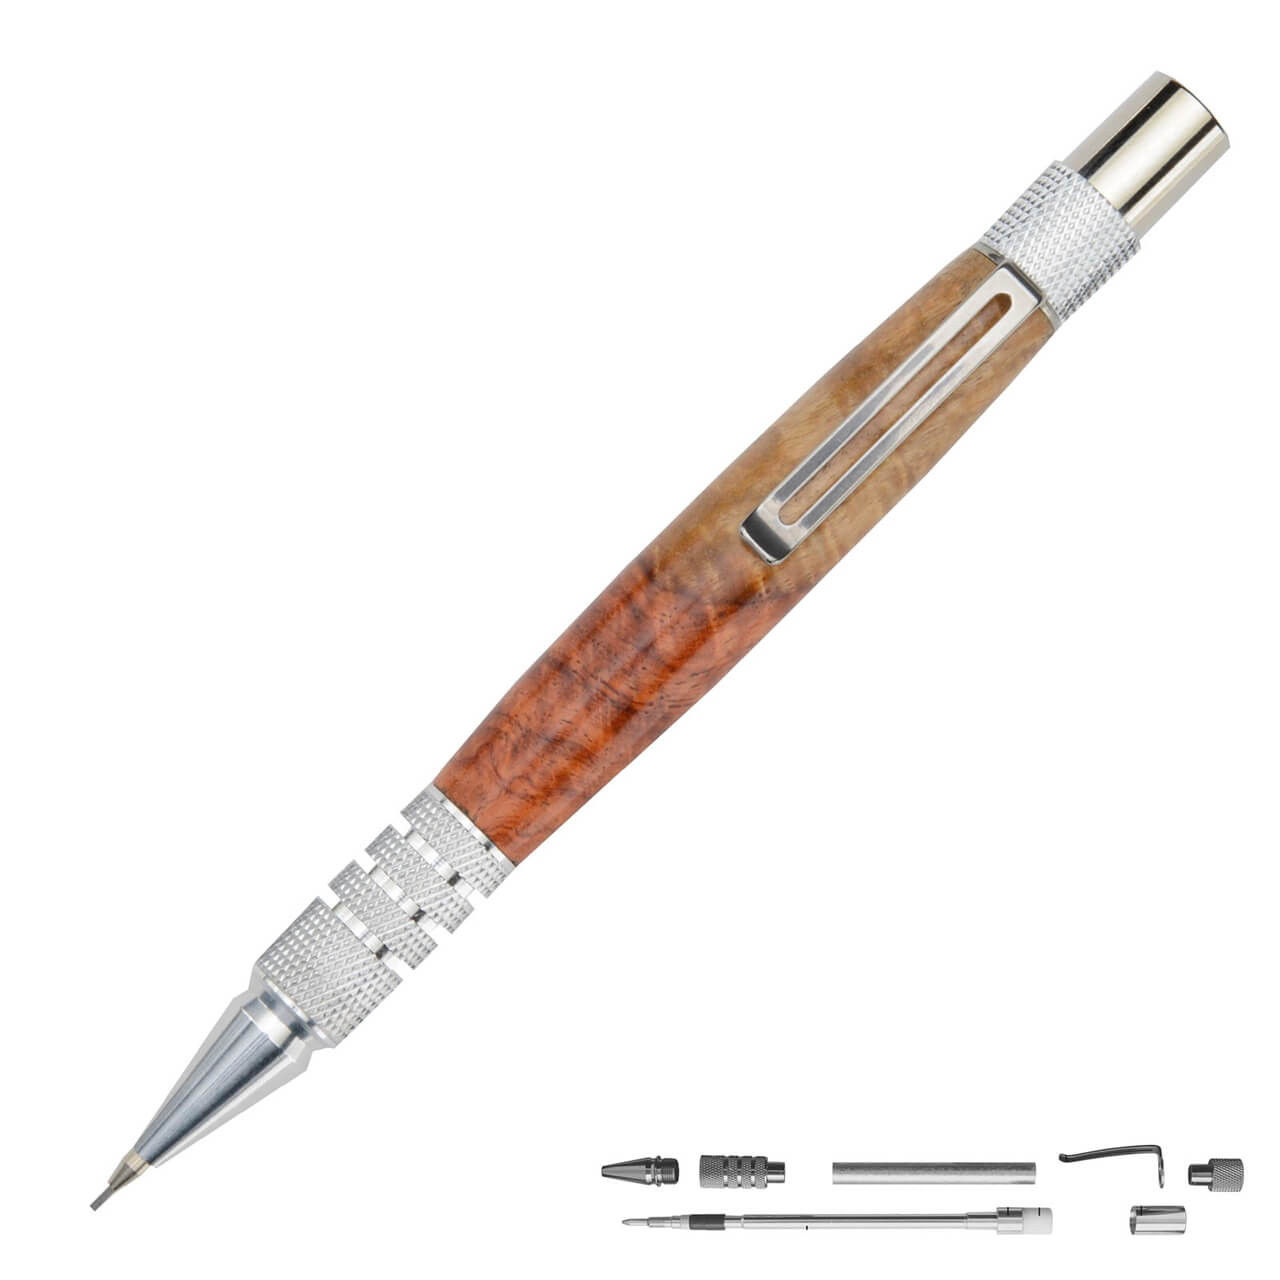 DuraClick Aluminum 6061-T6 Pencil Kit